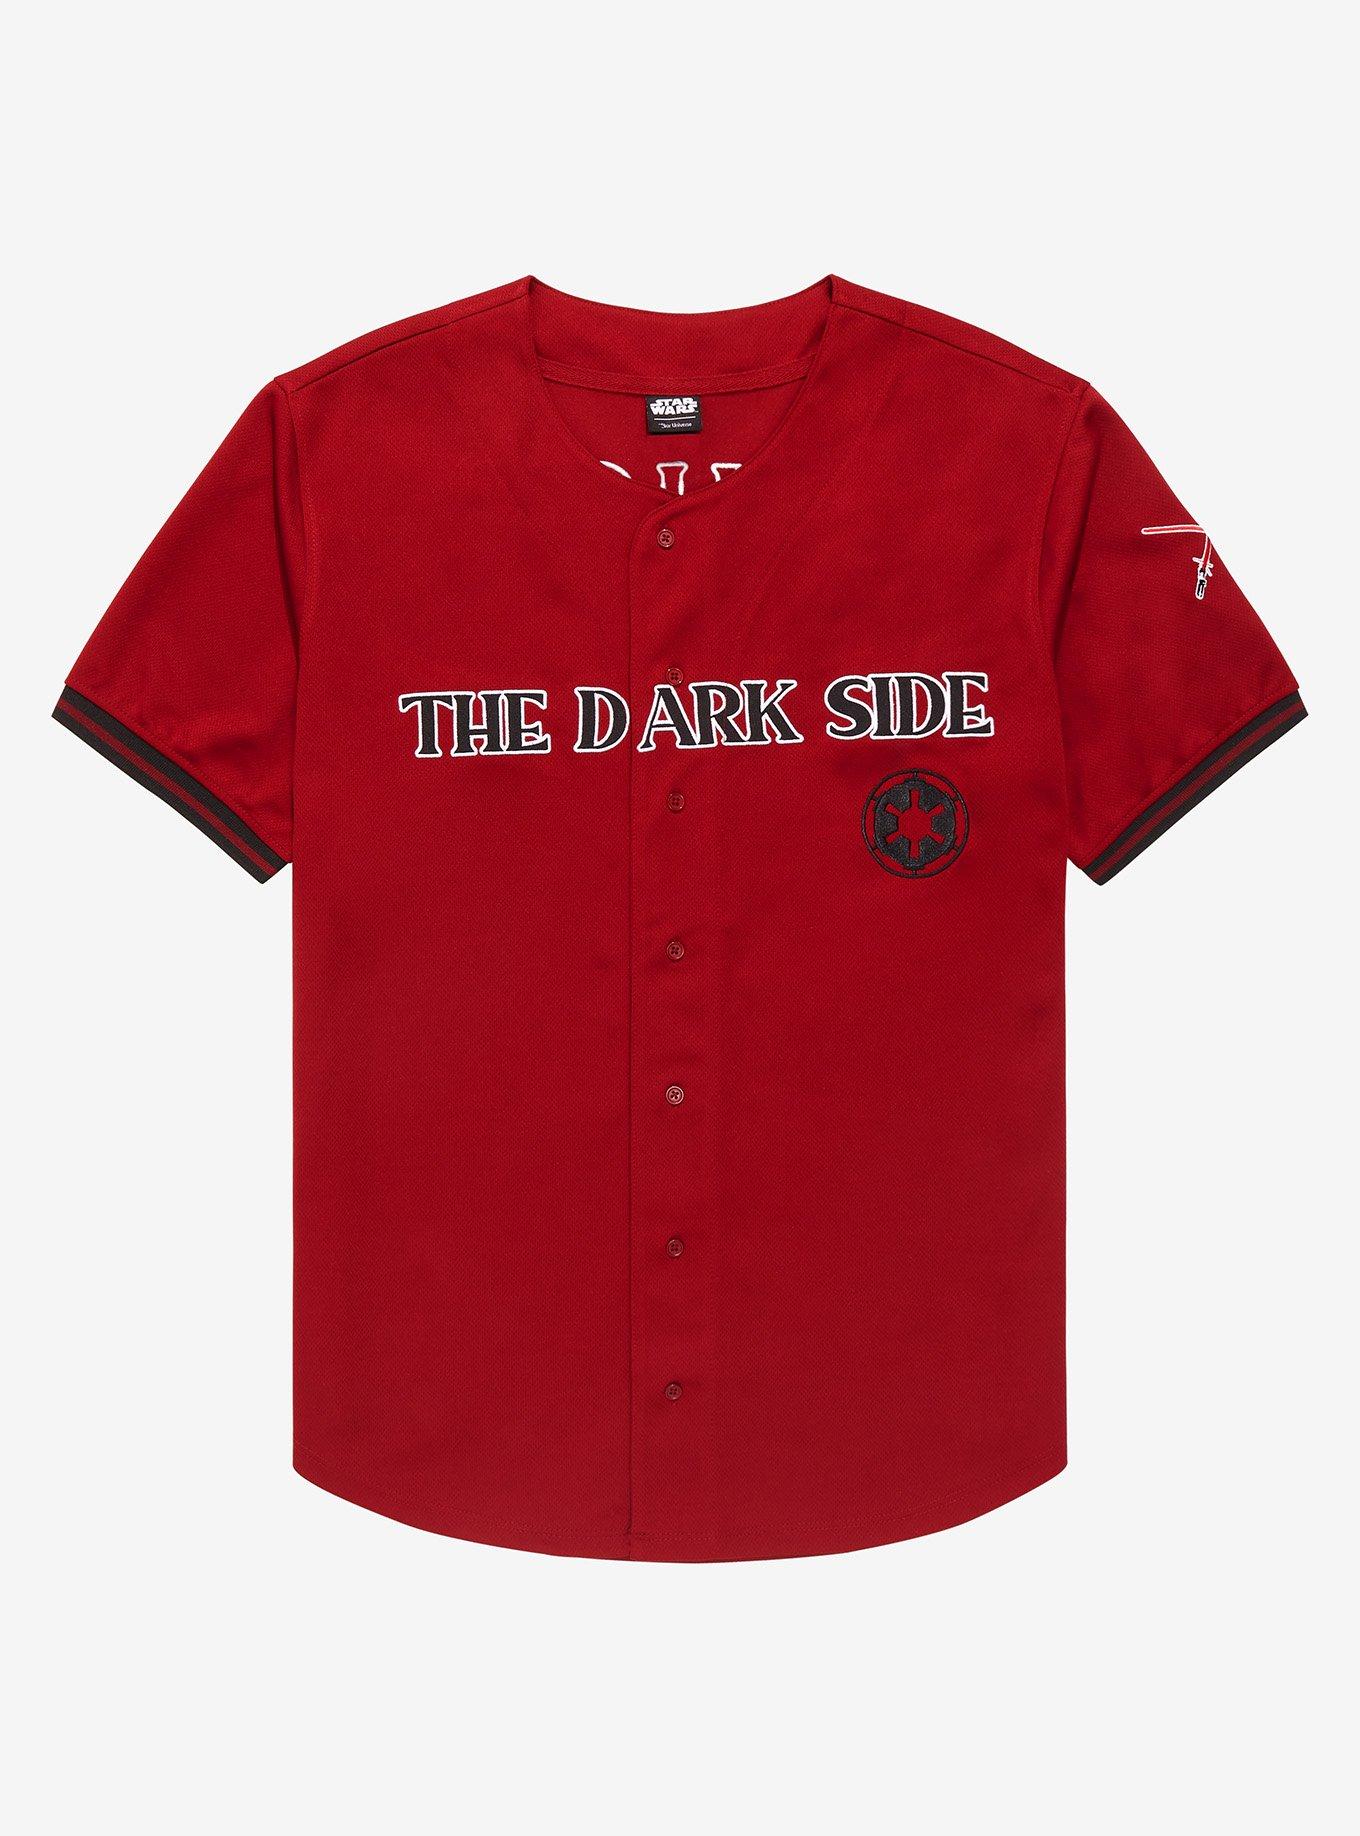 Dark Side Empire Full-Button Baseball Jersey *IN-STOCK* Adult XL